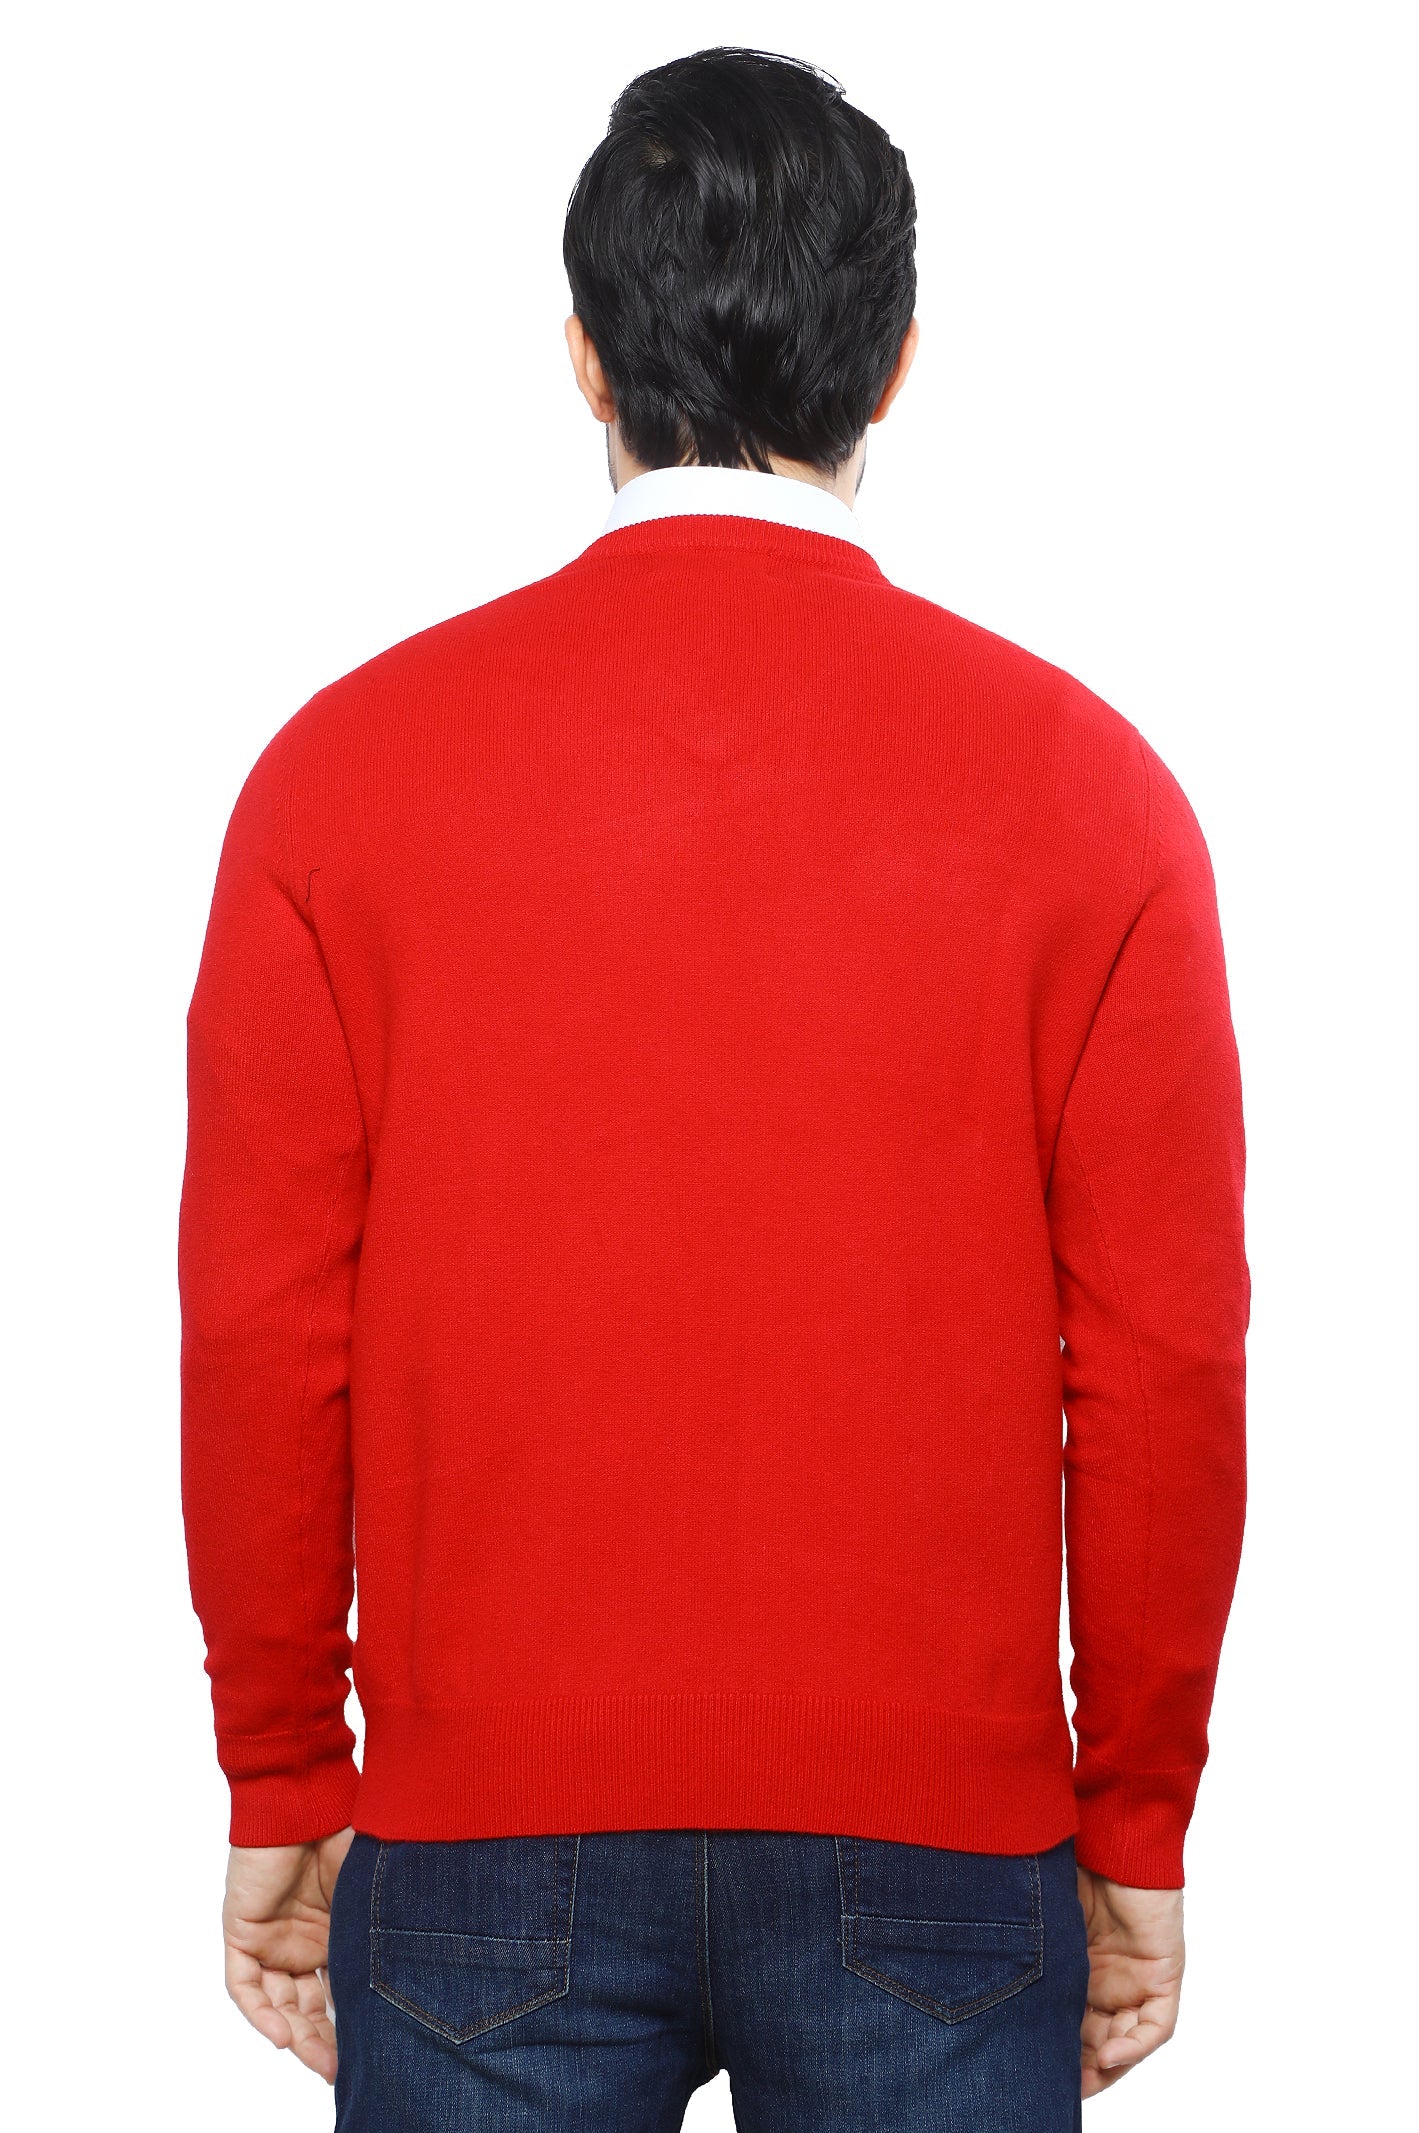 Gents Sweater SKU: SA608-RED